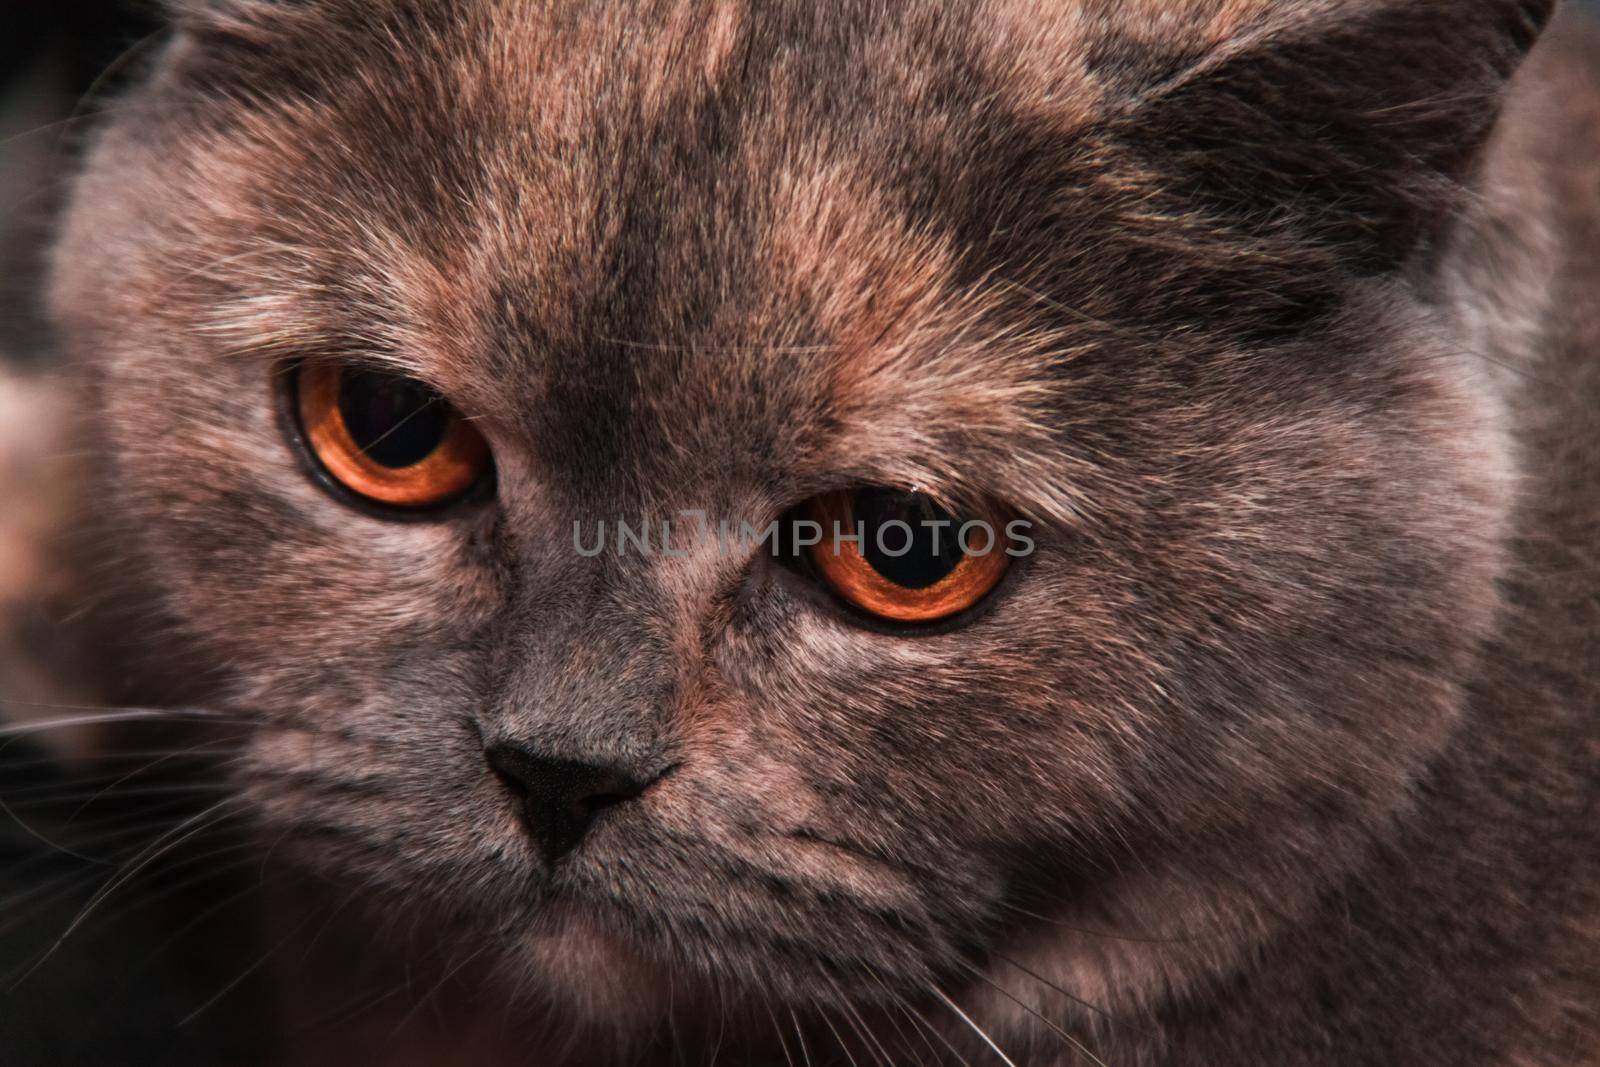 large expressive eyes of a British cat, portrait